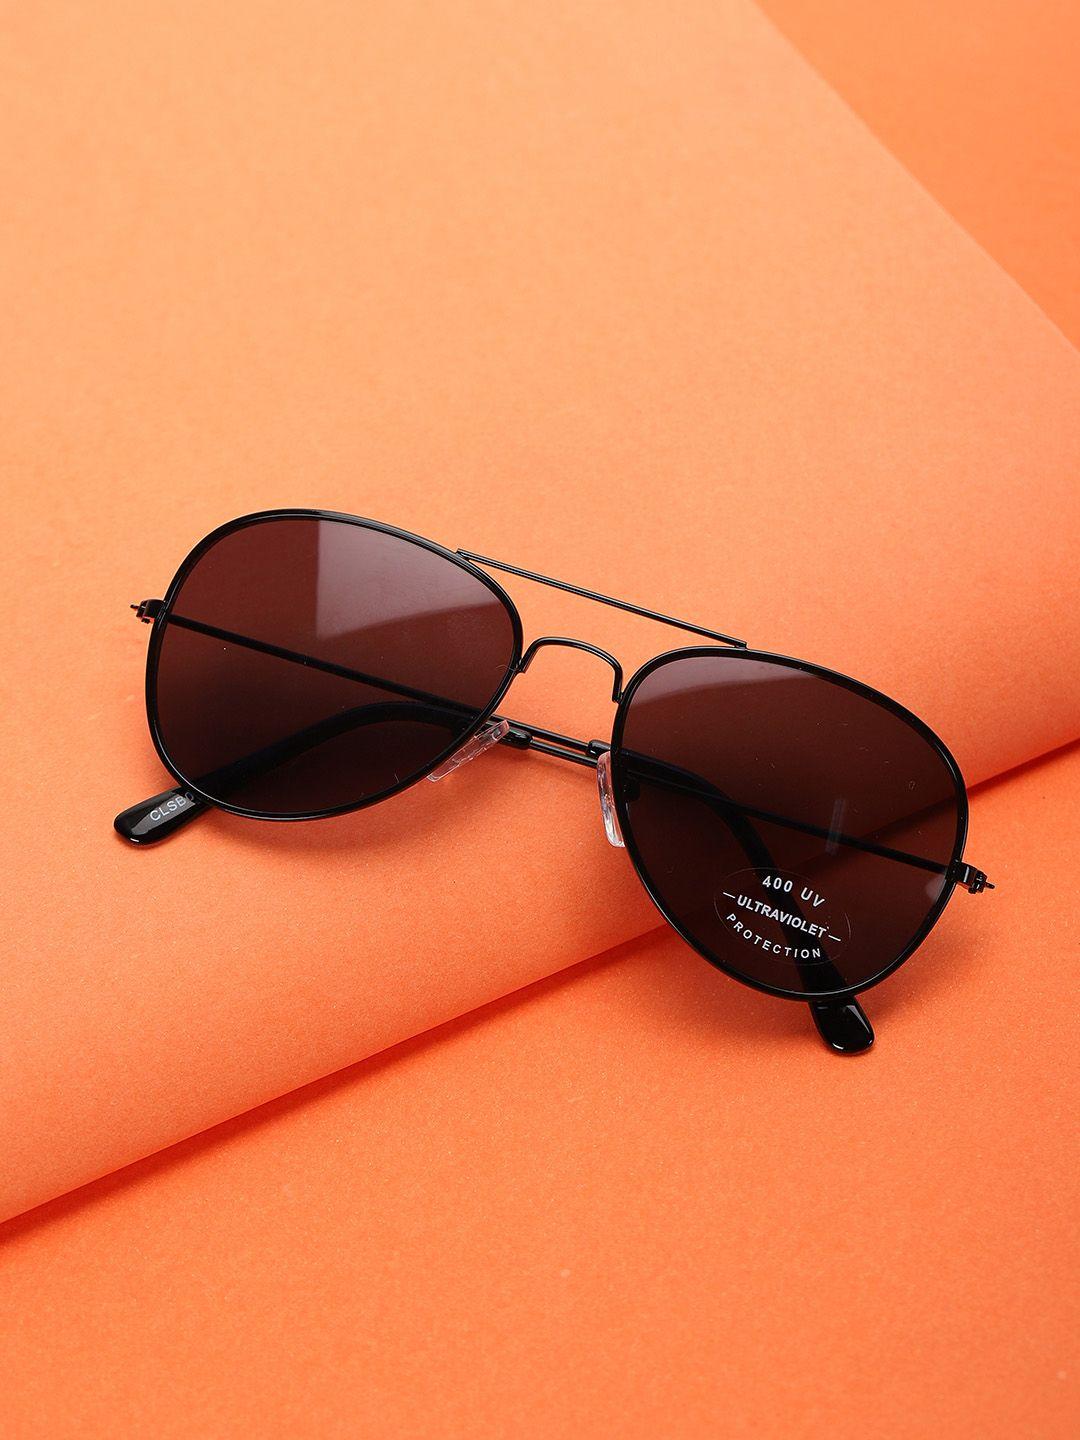 carlton-london-boys-black-lens-&-black-aviator-sunglasses-with-uv-protected-lens